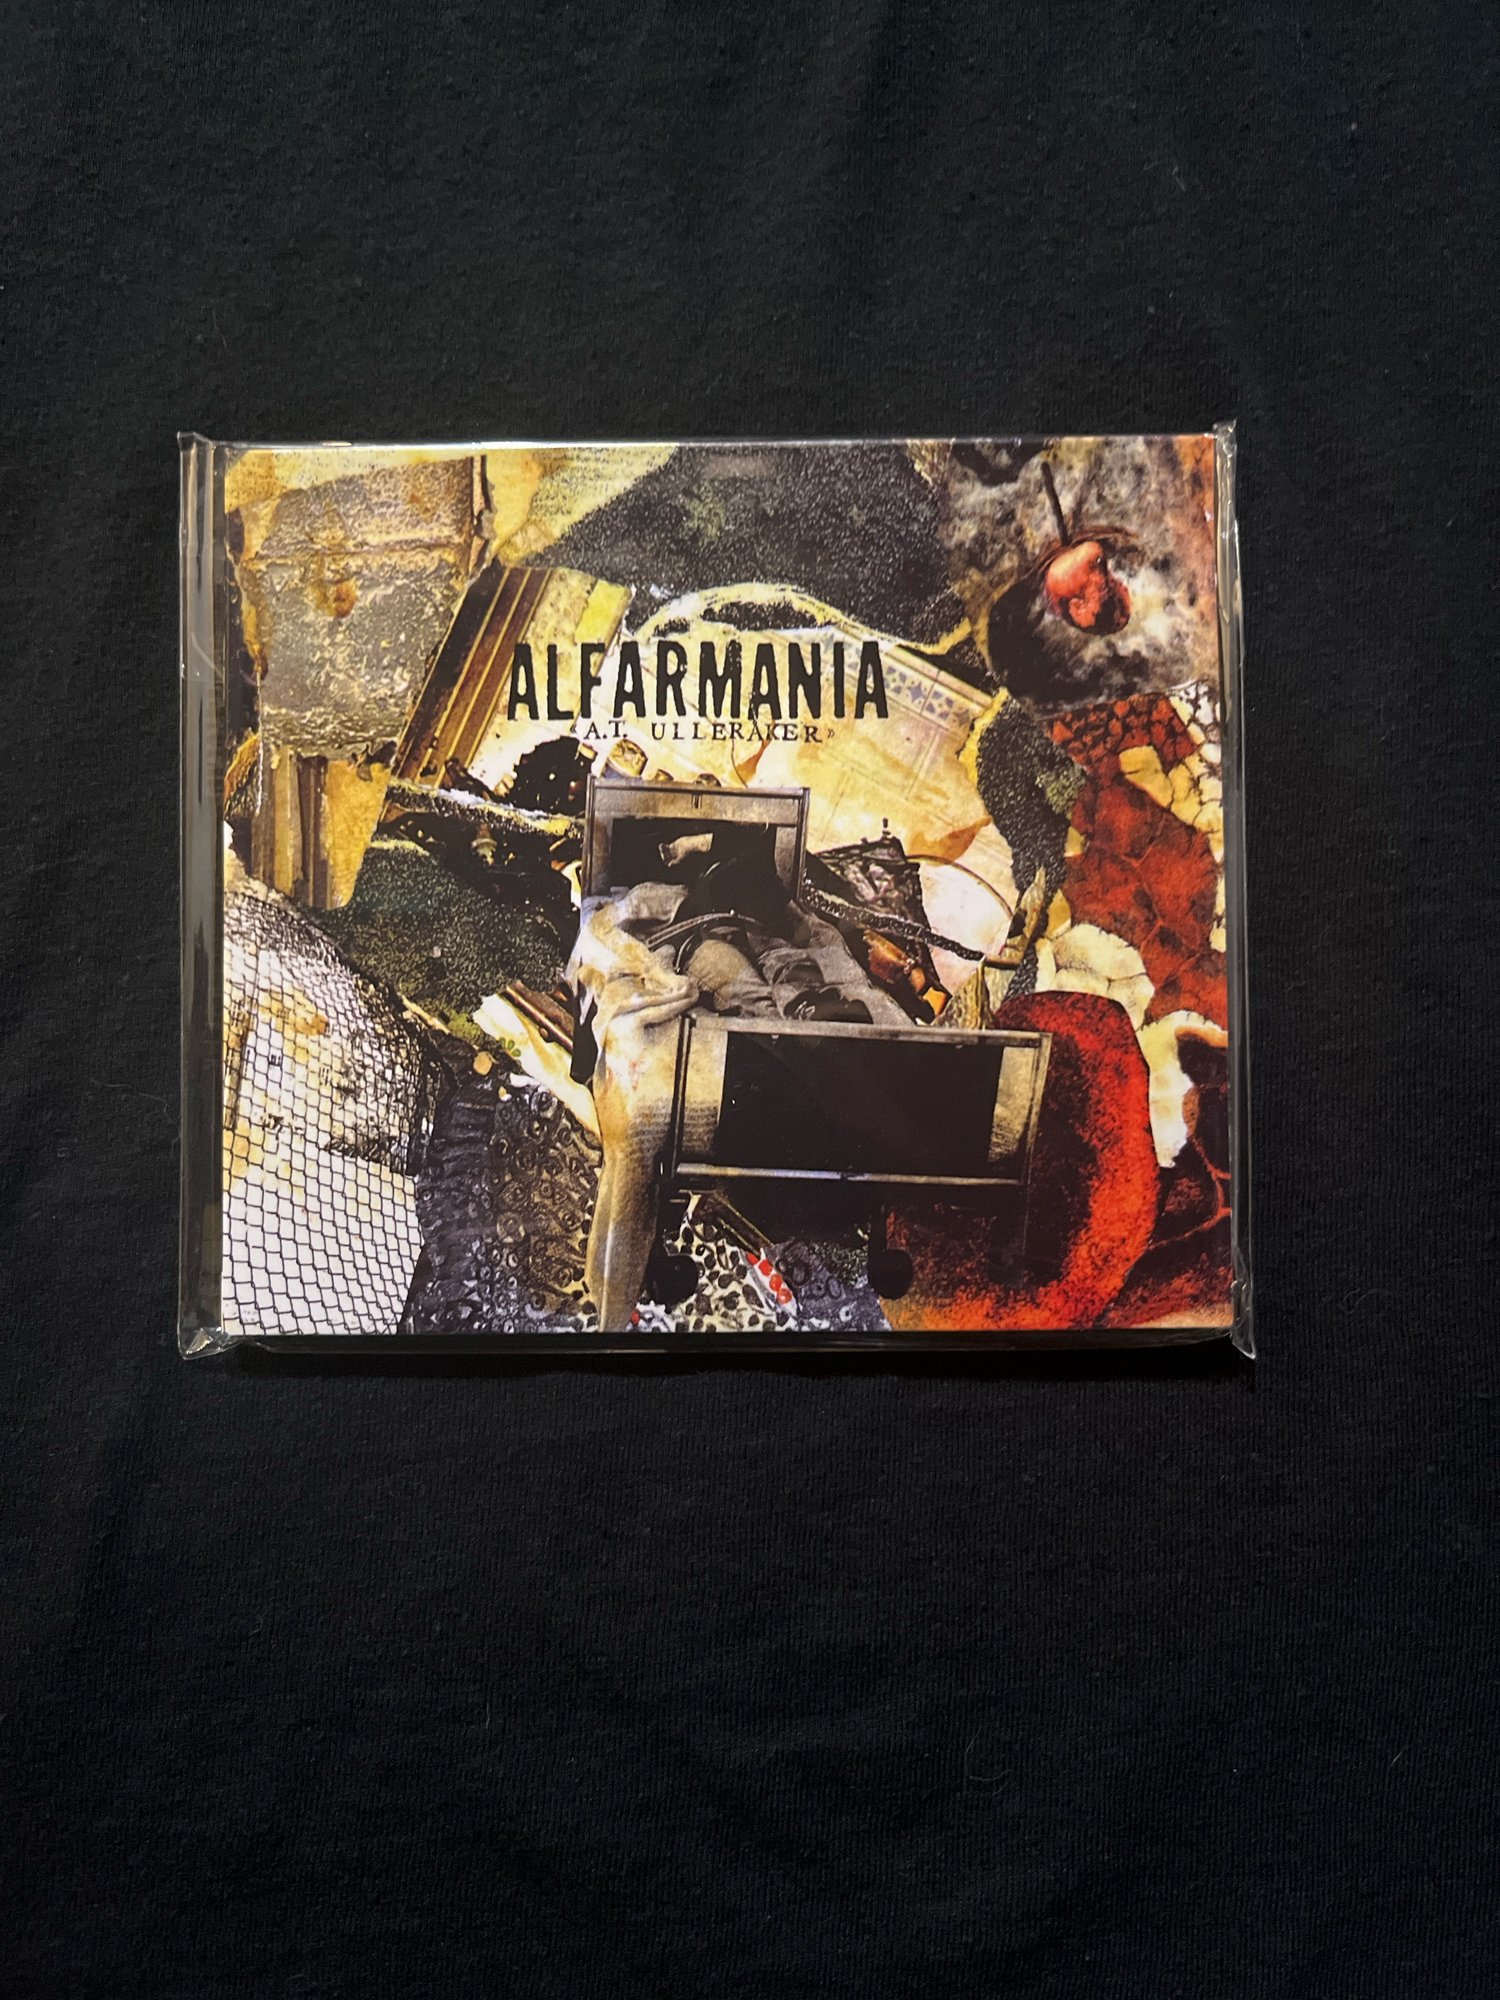 Alfarmania - At Ulleråker CD (Old Captain)